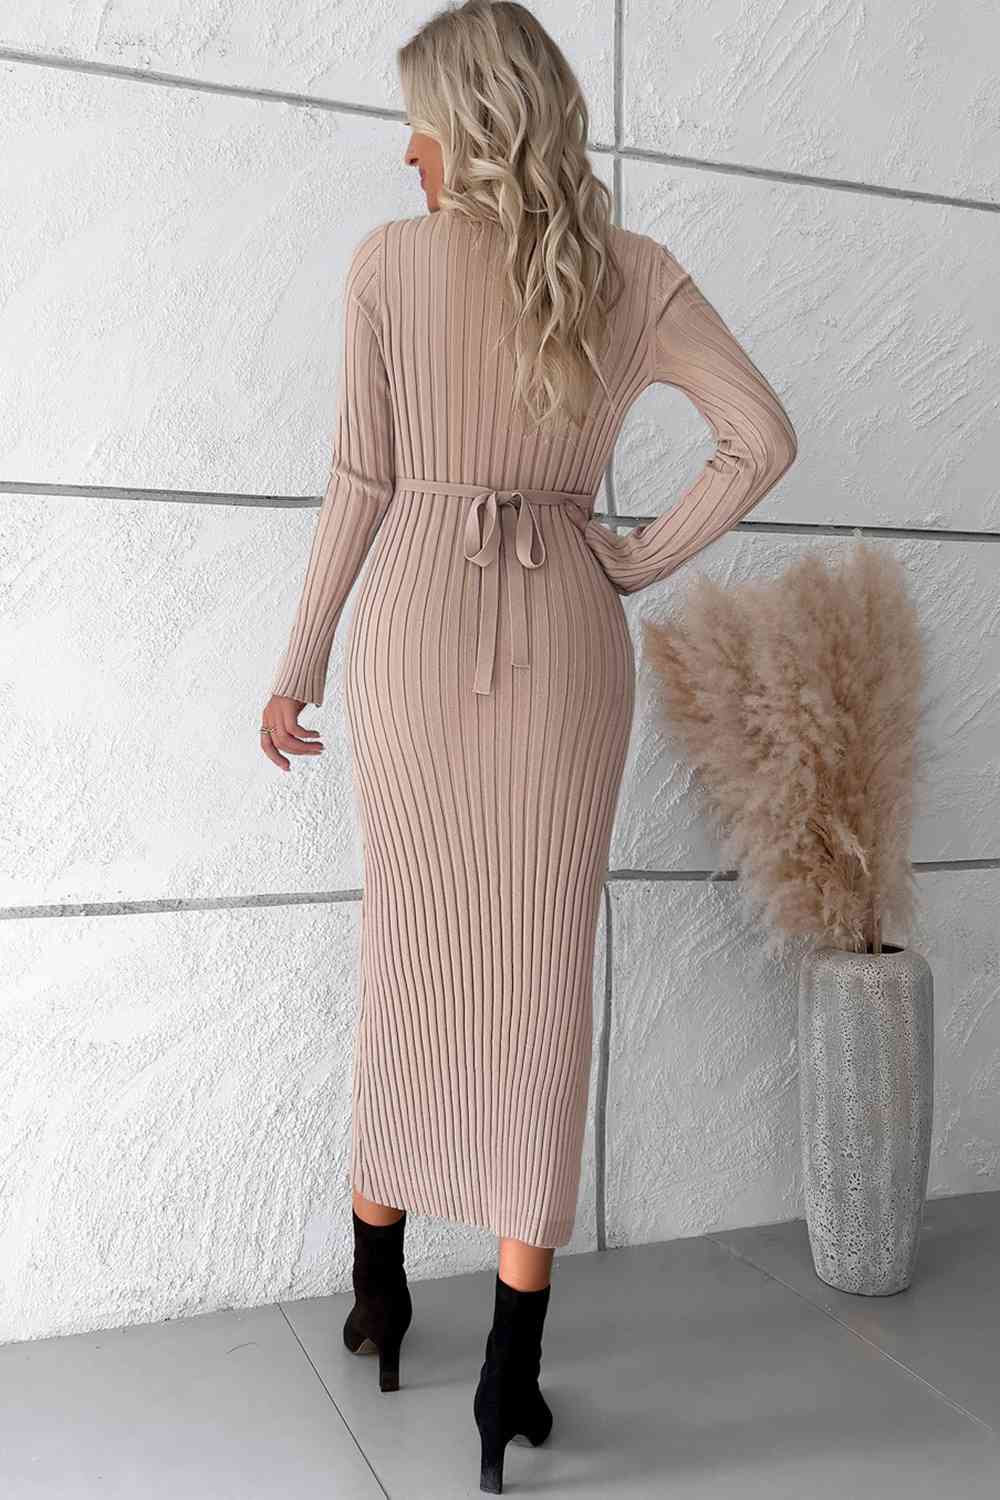 V-Neck Long Sleeve Ribbed Sweater Dress - Fashion Girl Online Store